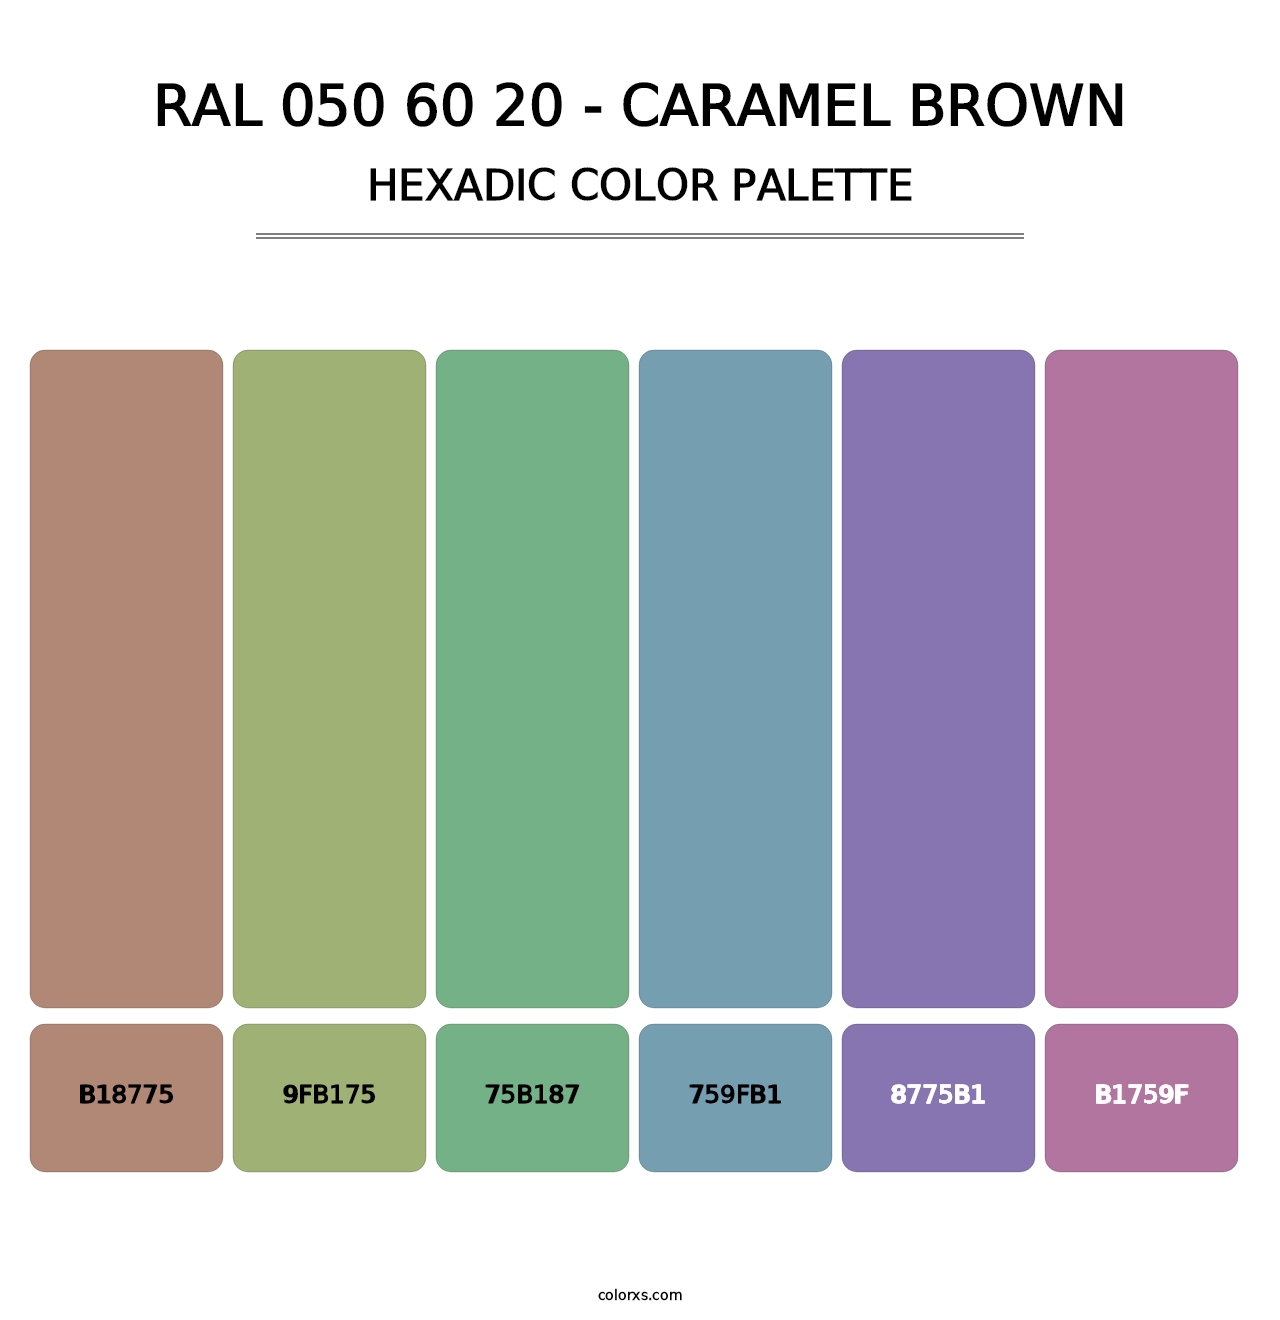 RAL 050 60 20 - Caramel Brown - Hexadic Color Palette